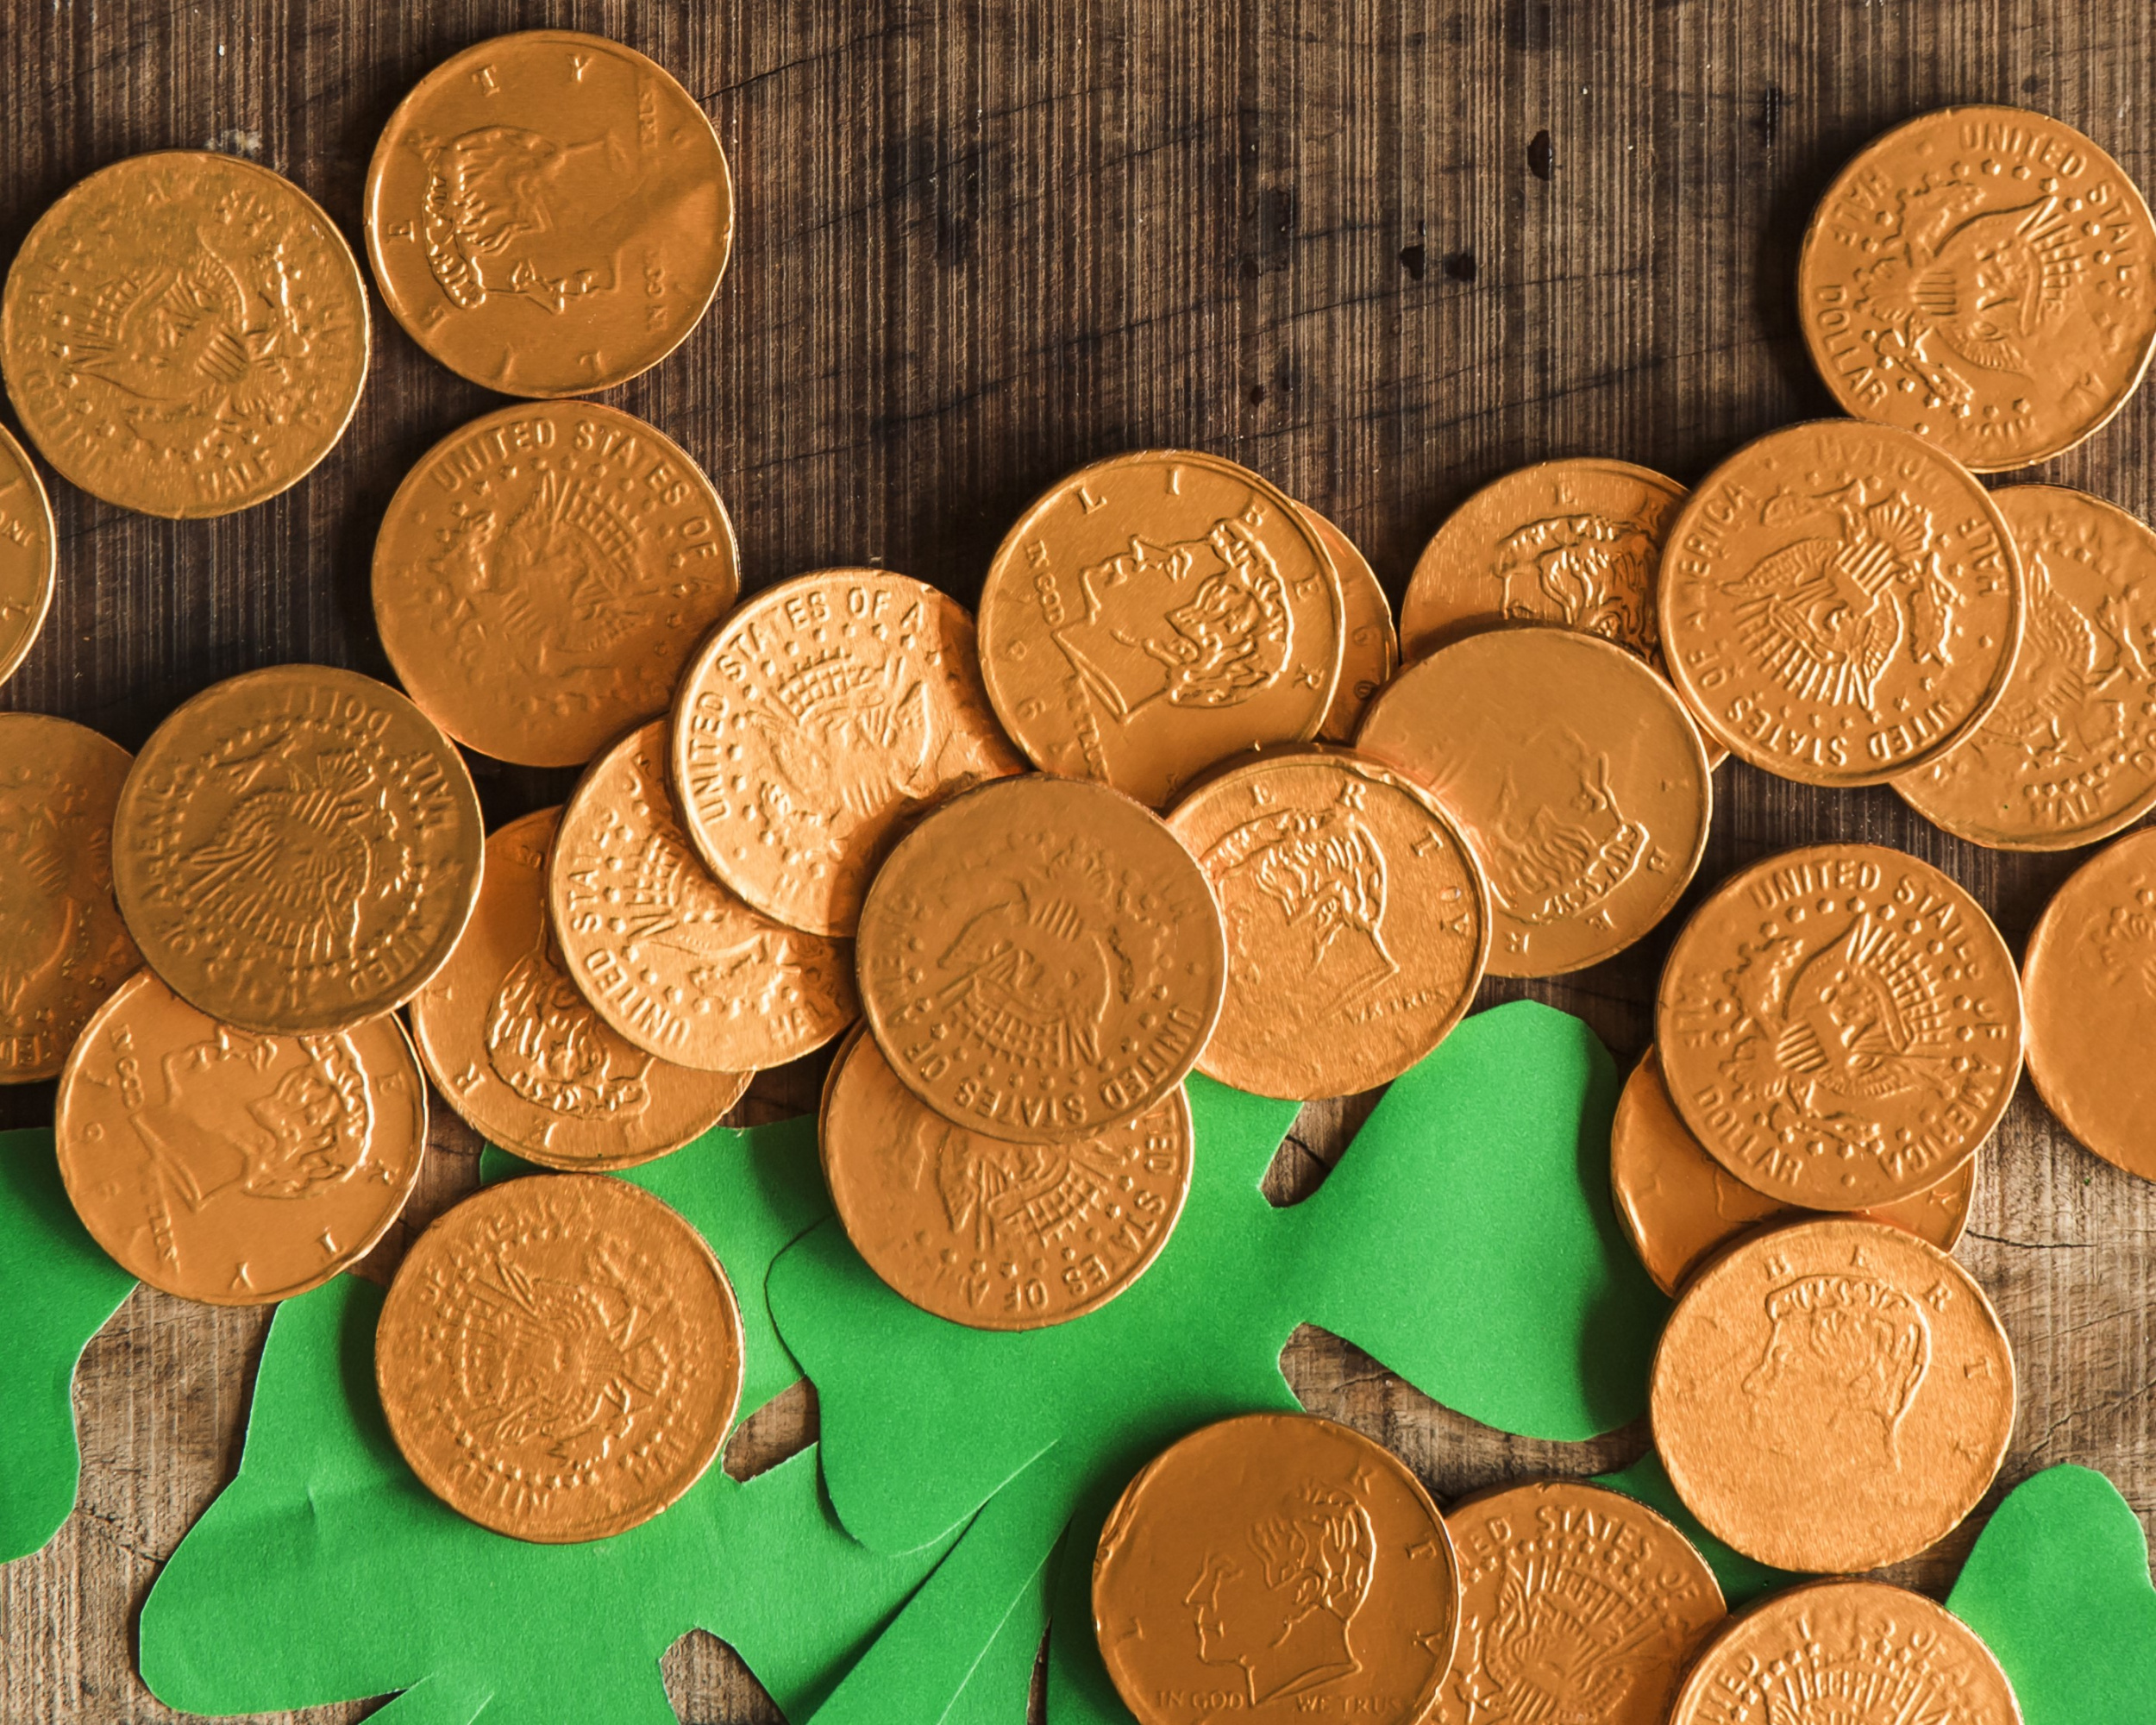 heap-coins-paper-shamrocks-wooden-table.jpg